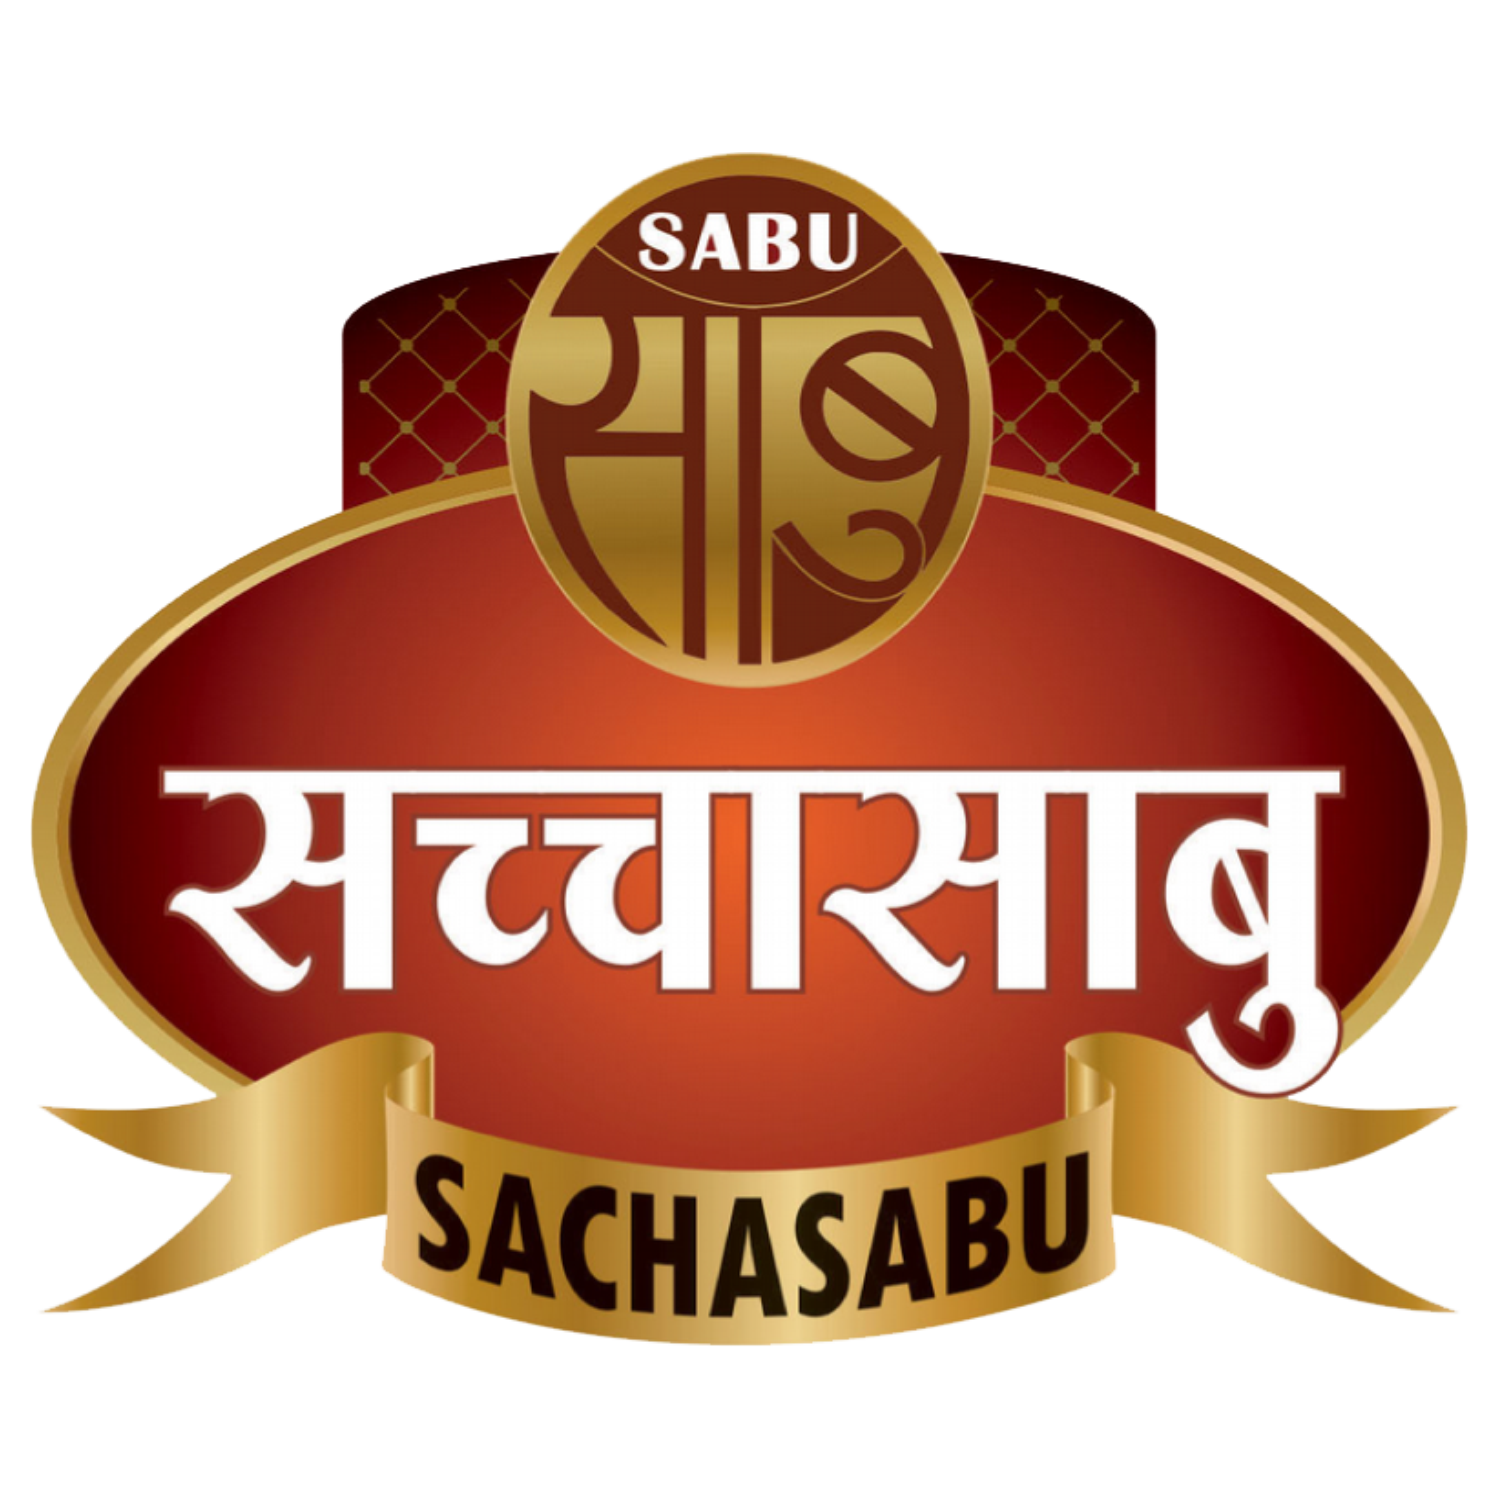 Sachasabu